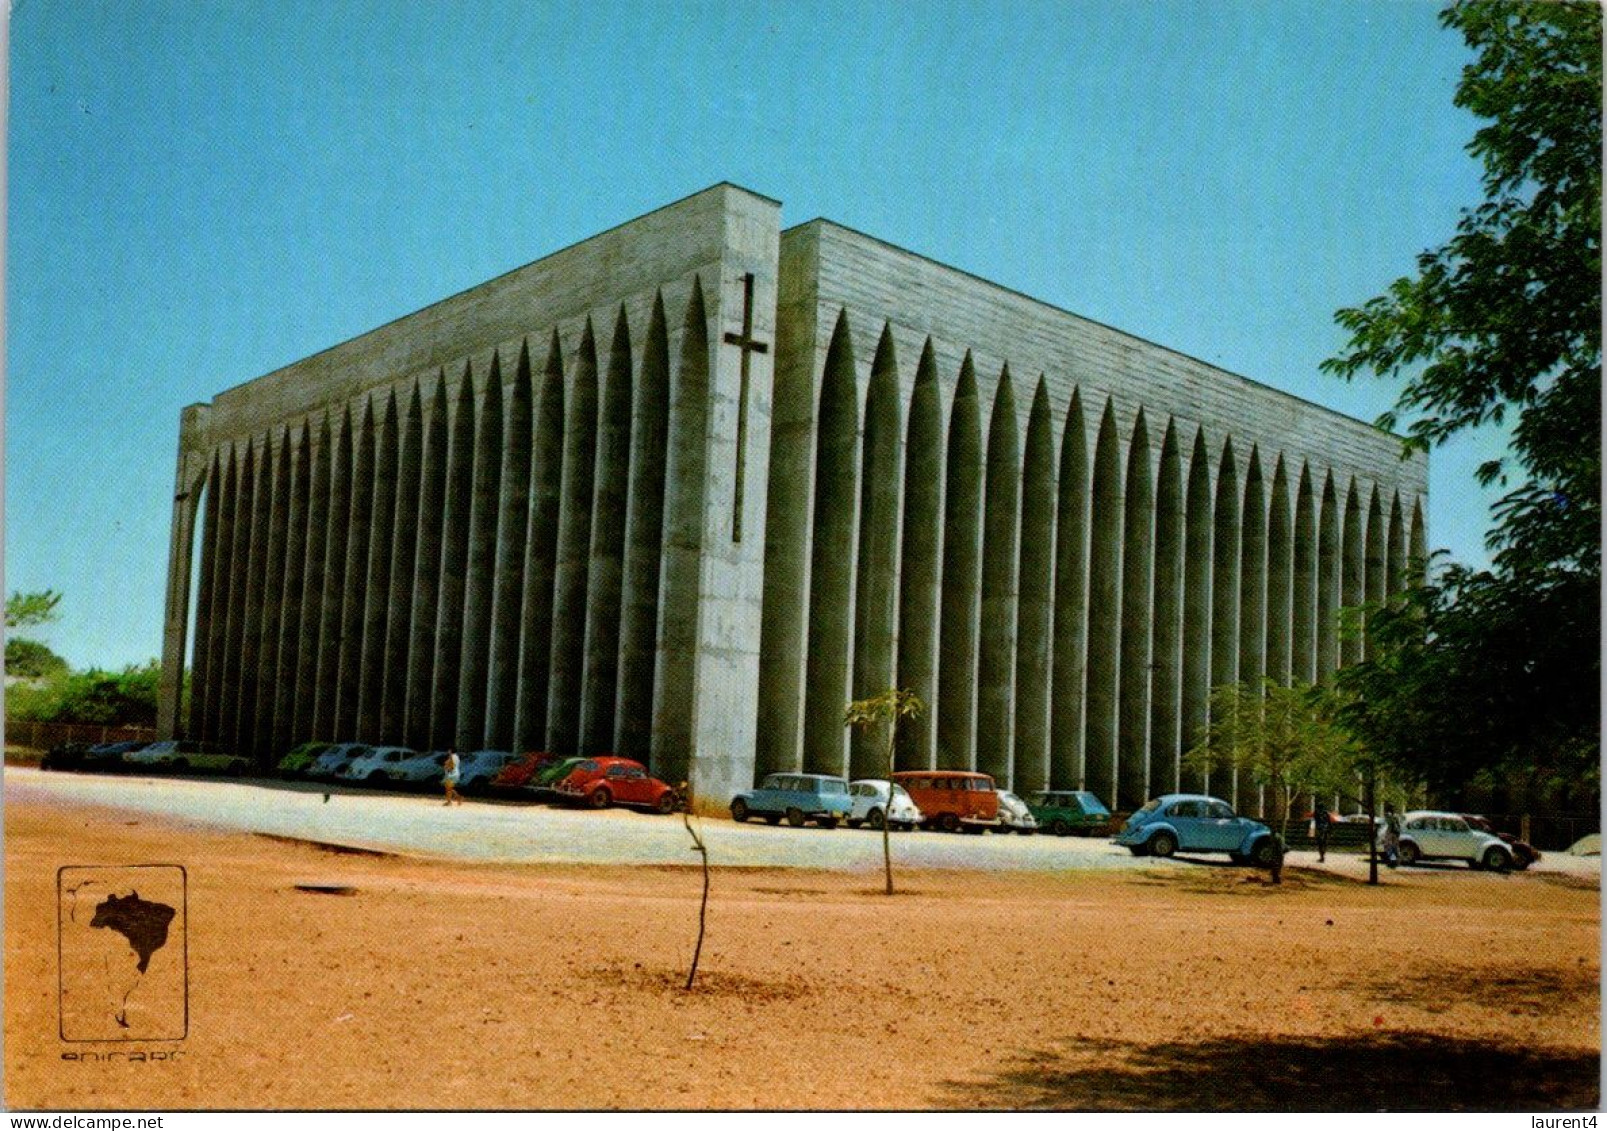 16-9-2023 (1 U 18A) Brazil - Brazilia Dom Bosco Church - Brasilia